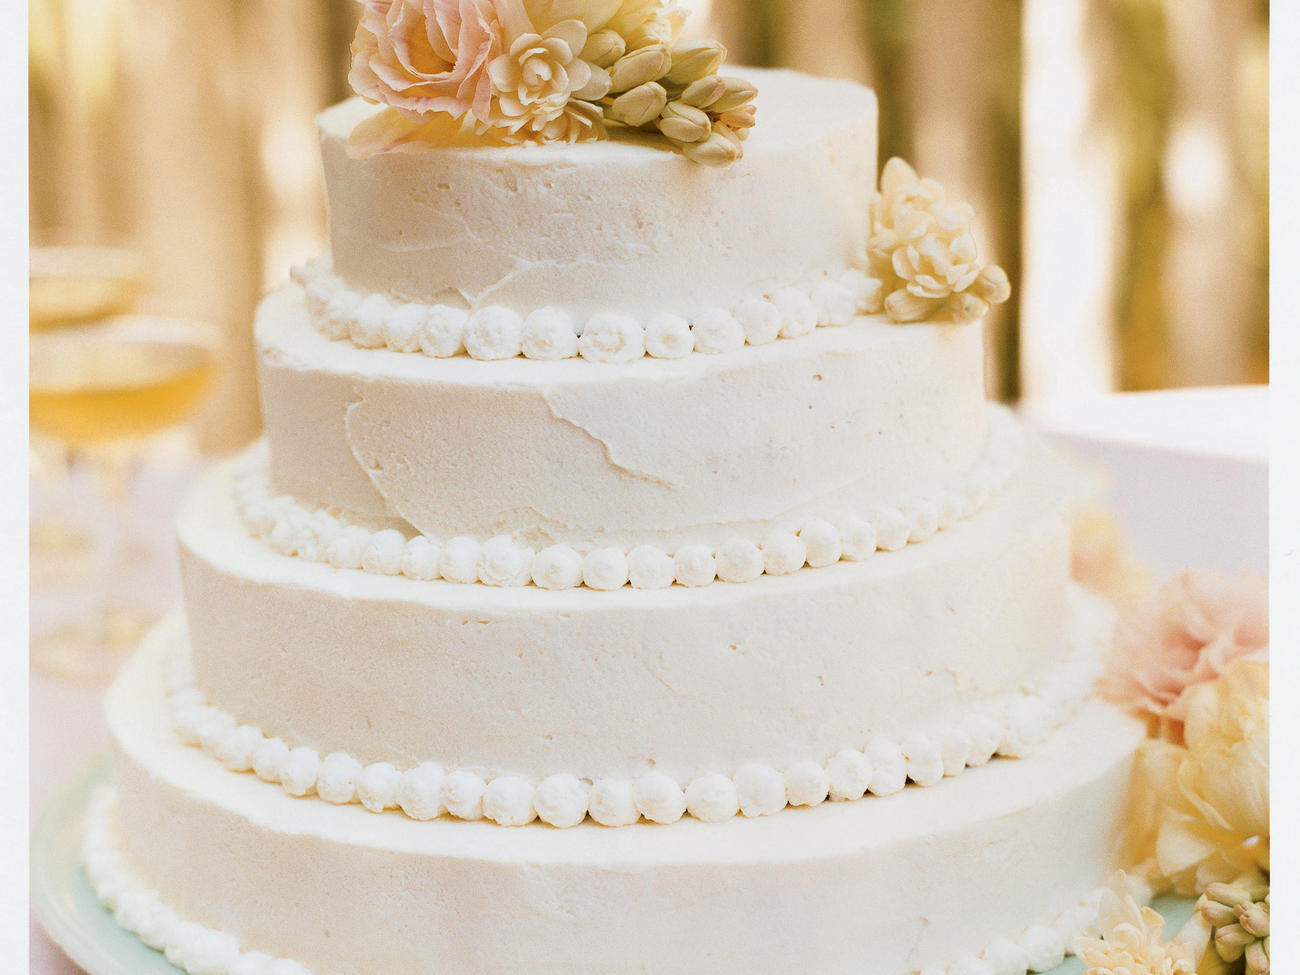 How to Make a Beautiful Wedding Cake